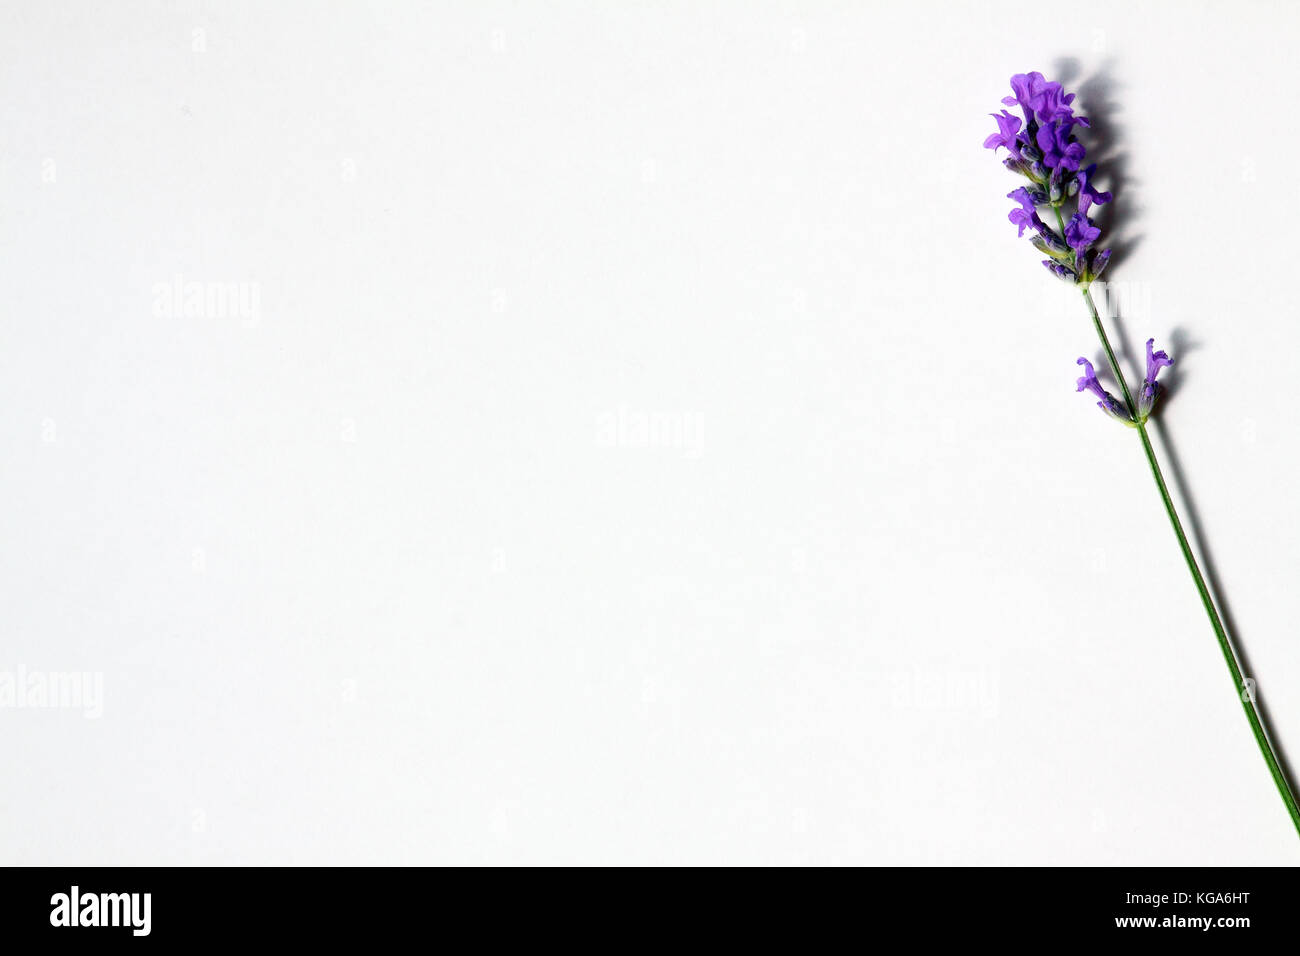 Lavender flower on a plain white background Stock Photo - Alamy